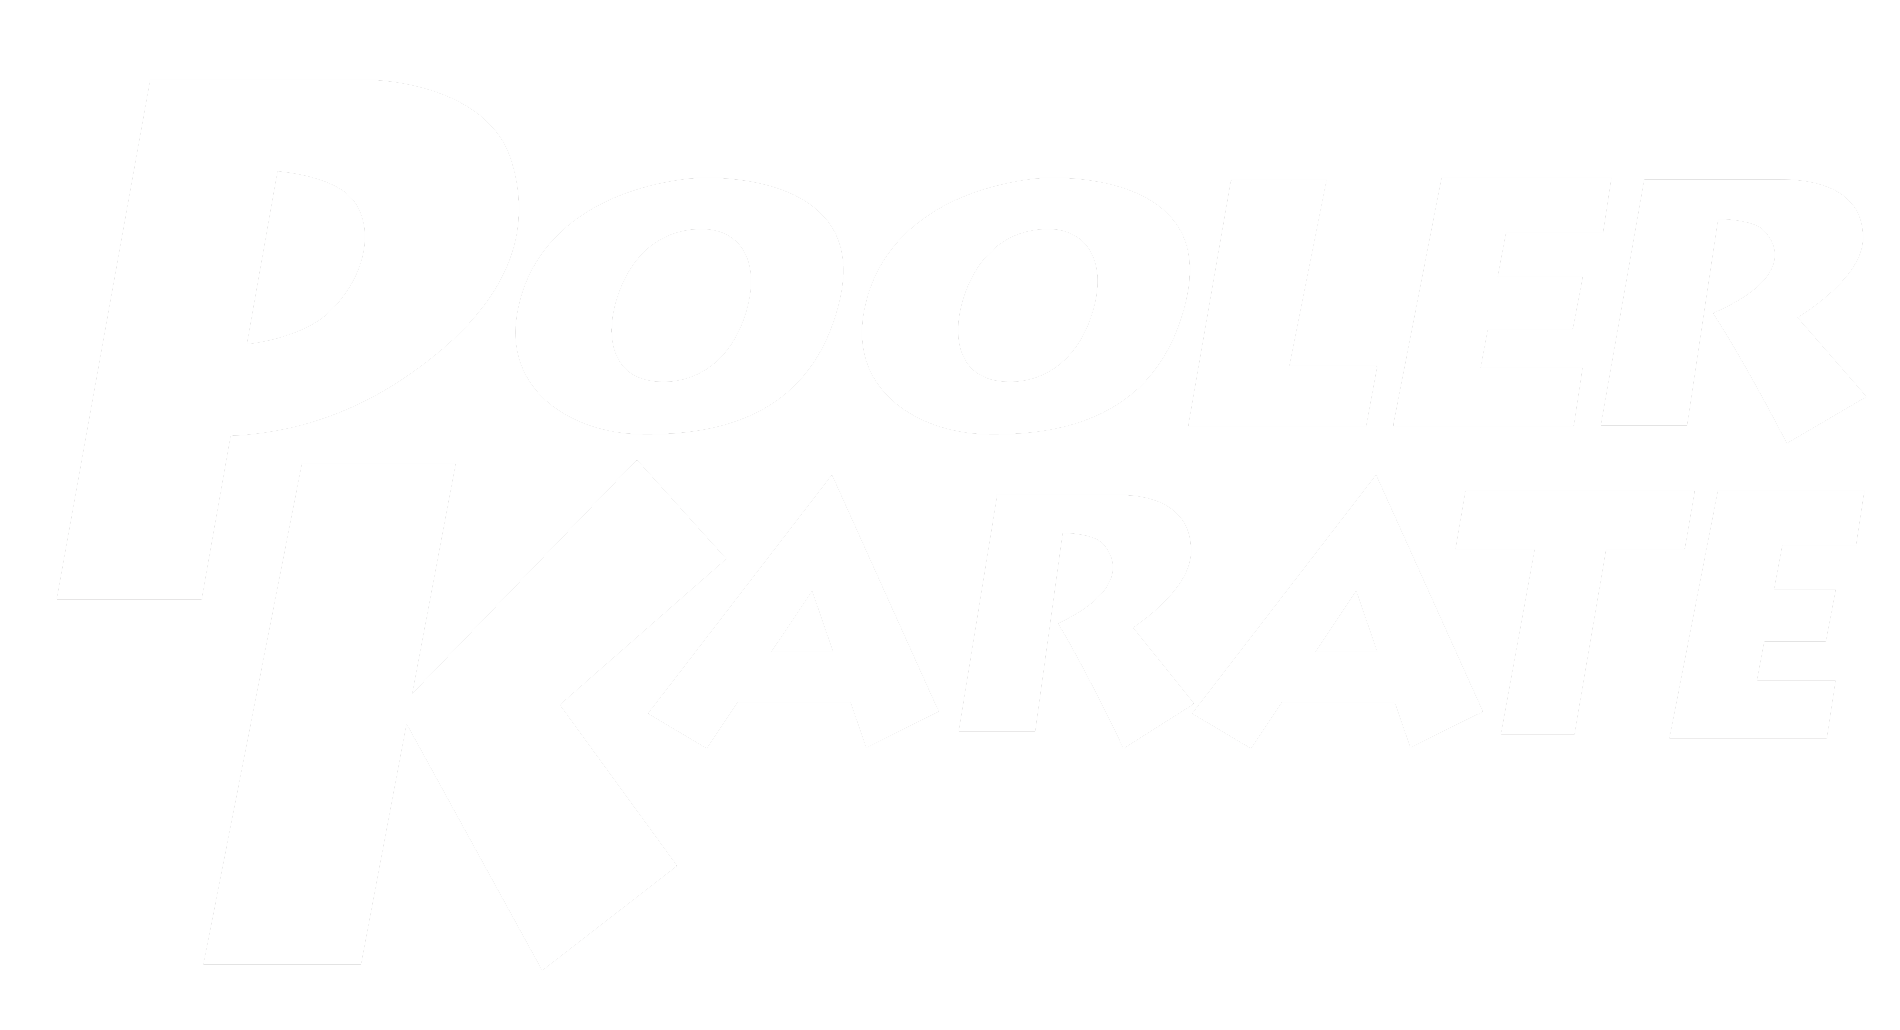 Pooler Karate